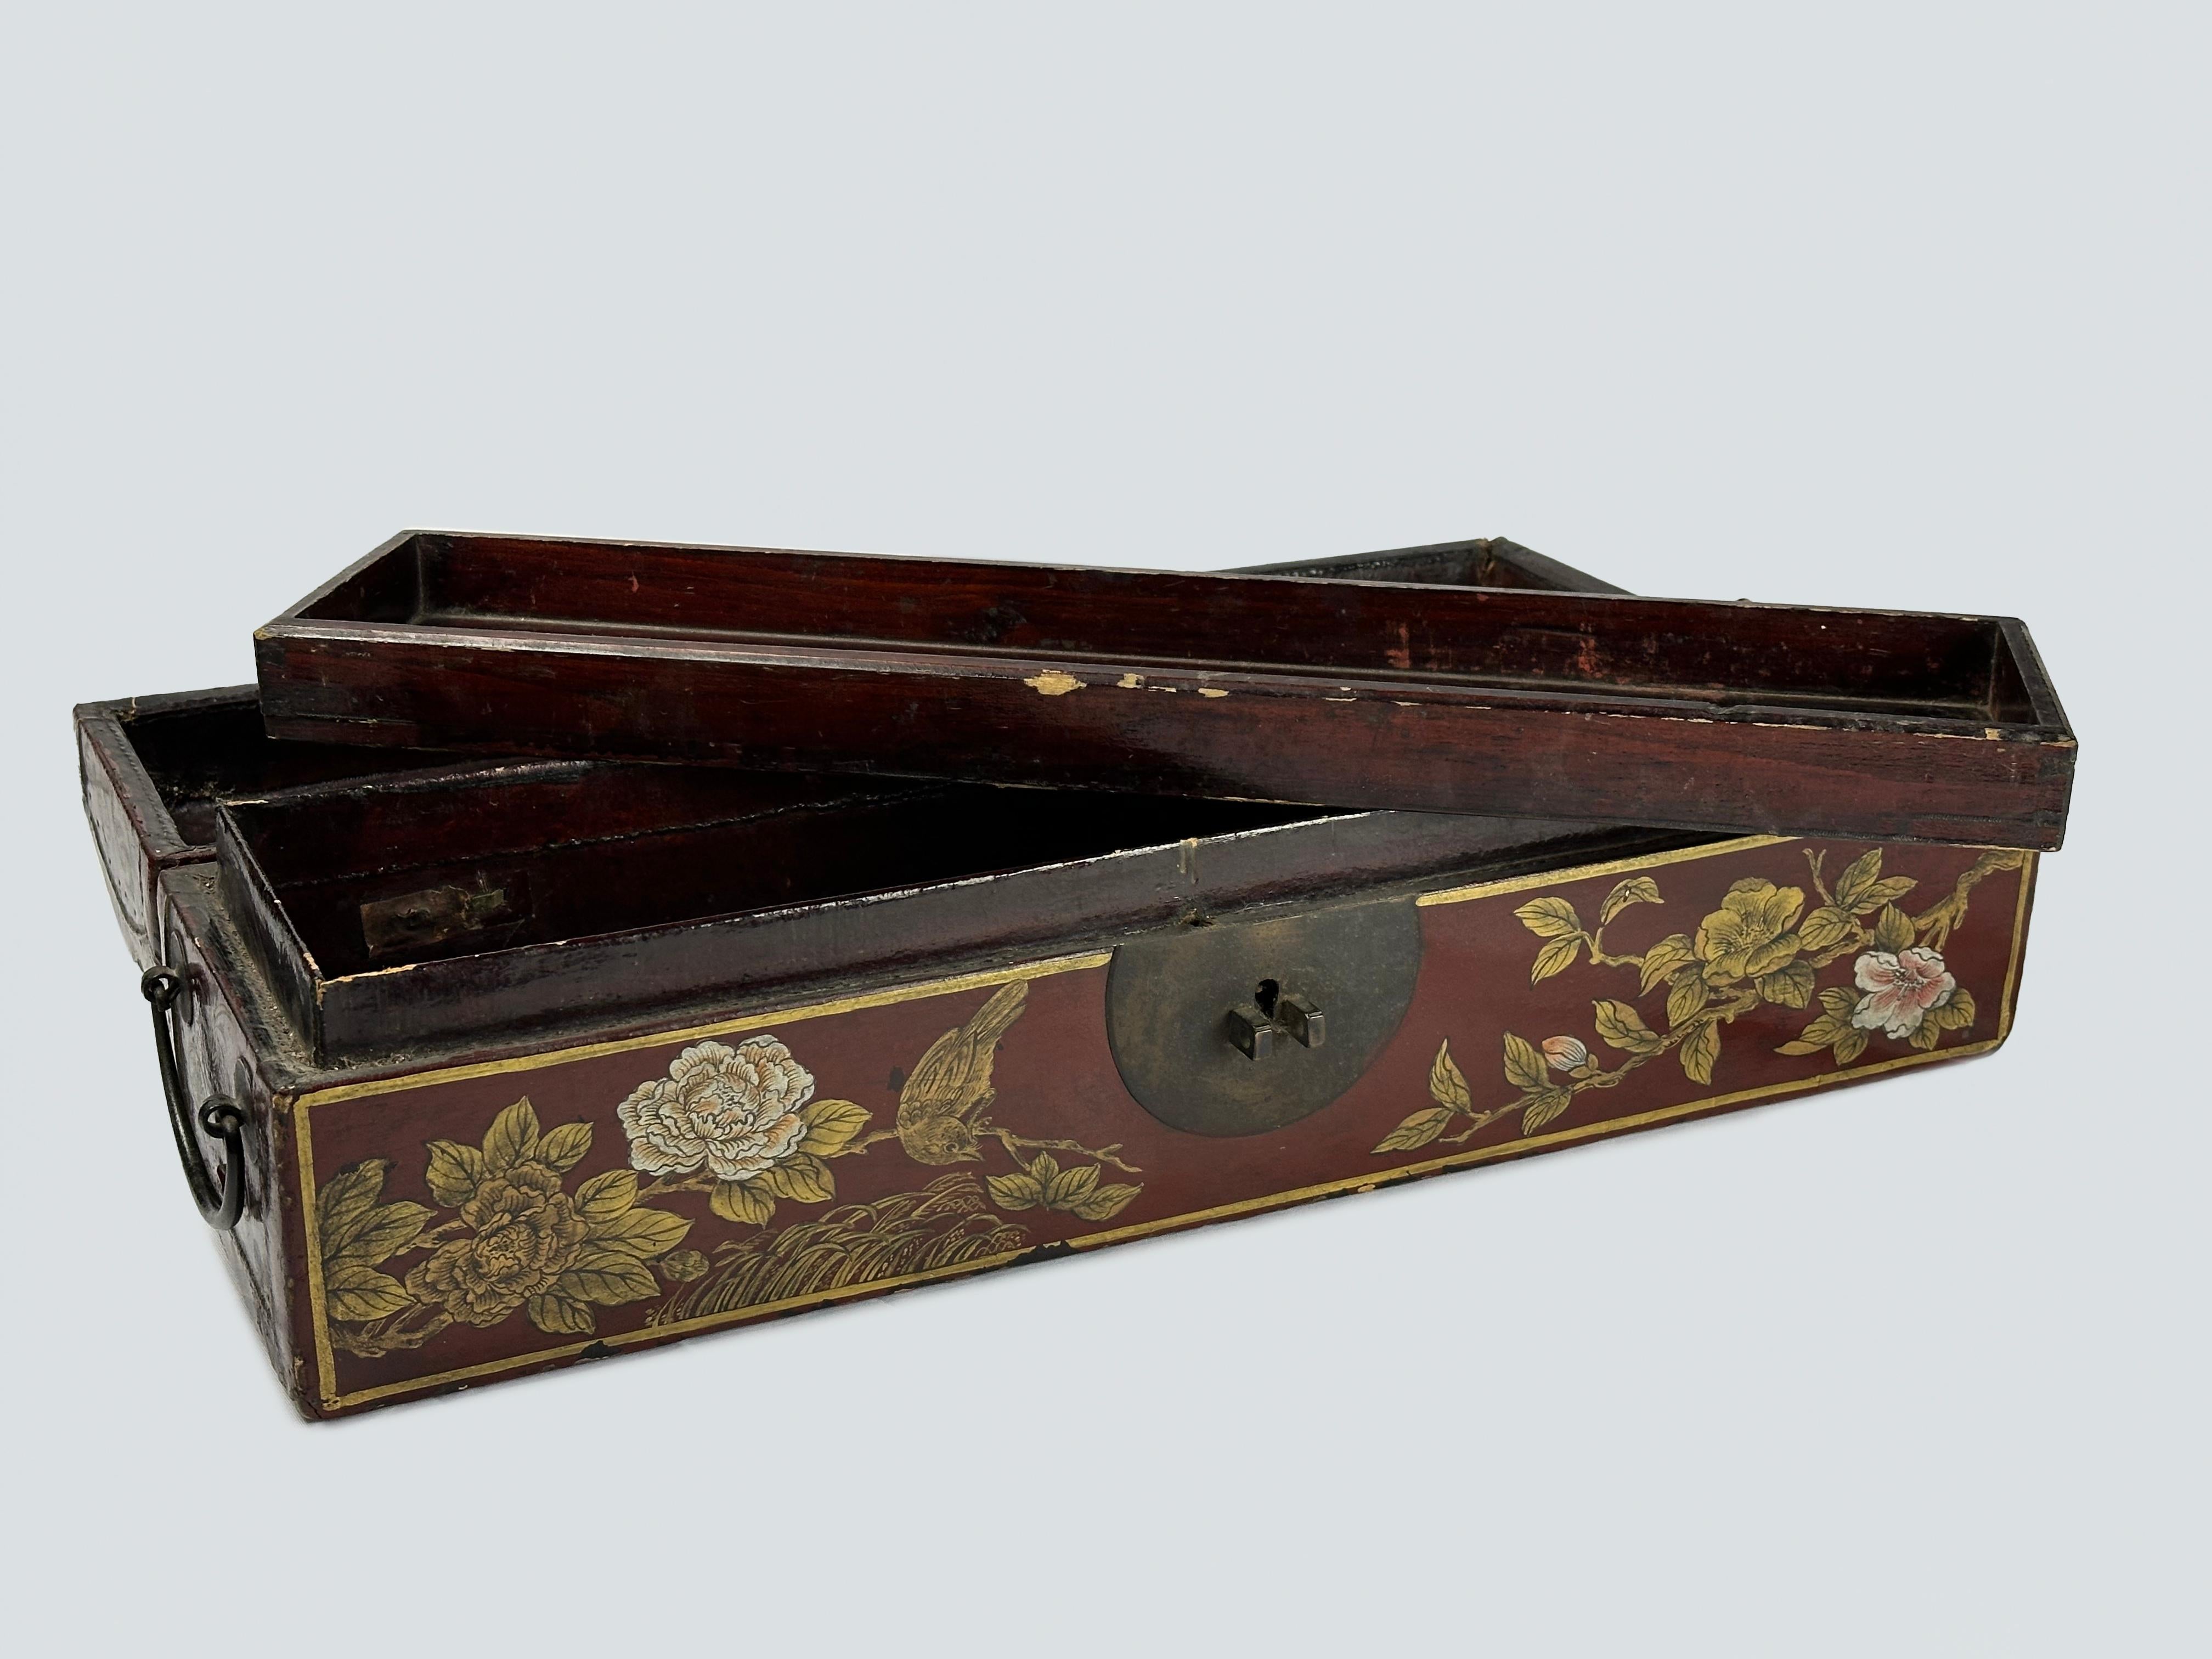 Handpainted Chinese Jewelry Box  c. 19th century  For Sale 1